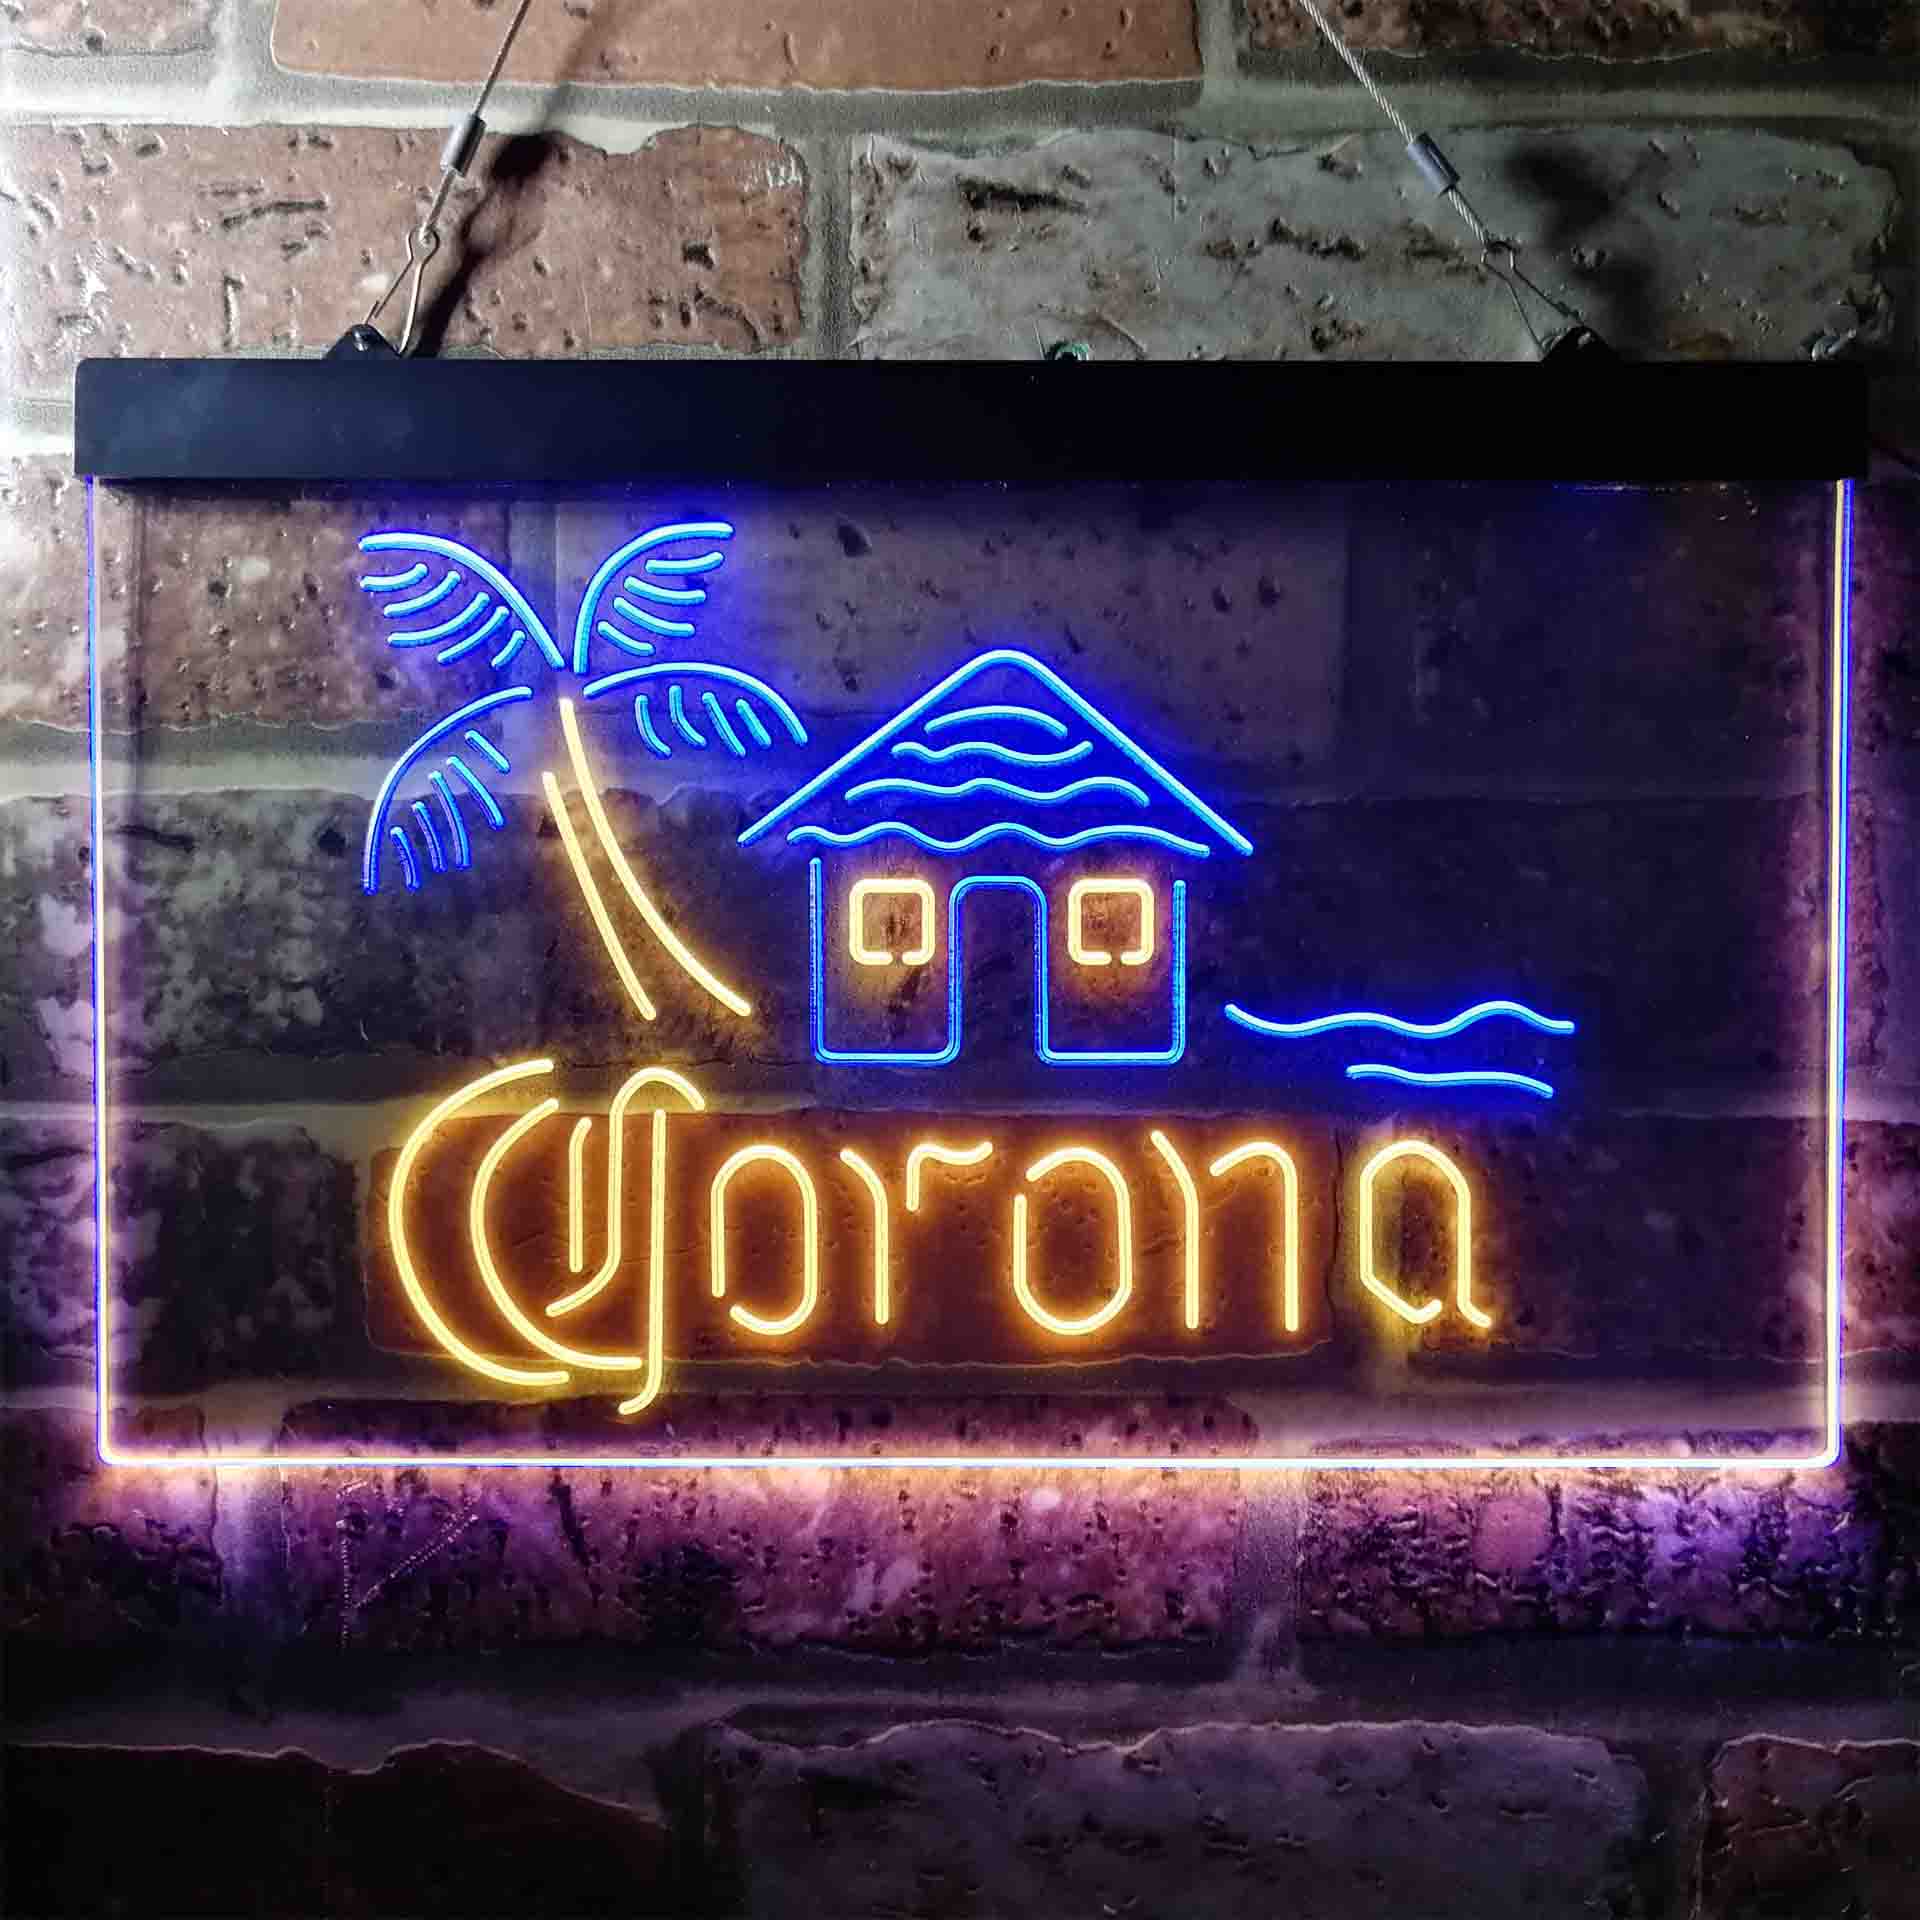 Corona Cabin Island Palm Tree Neon-Like LED Sign